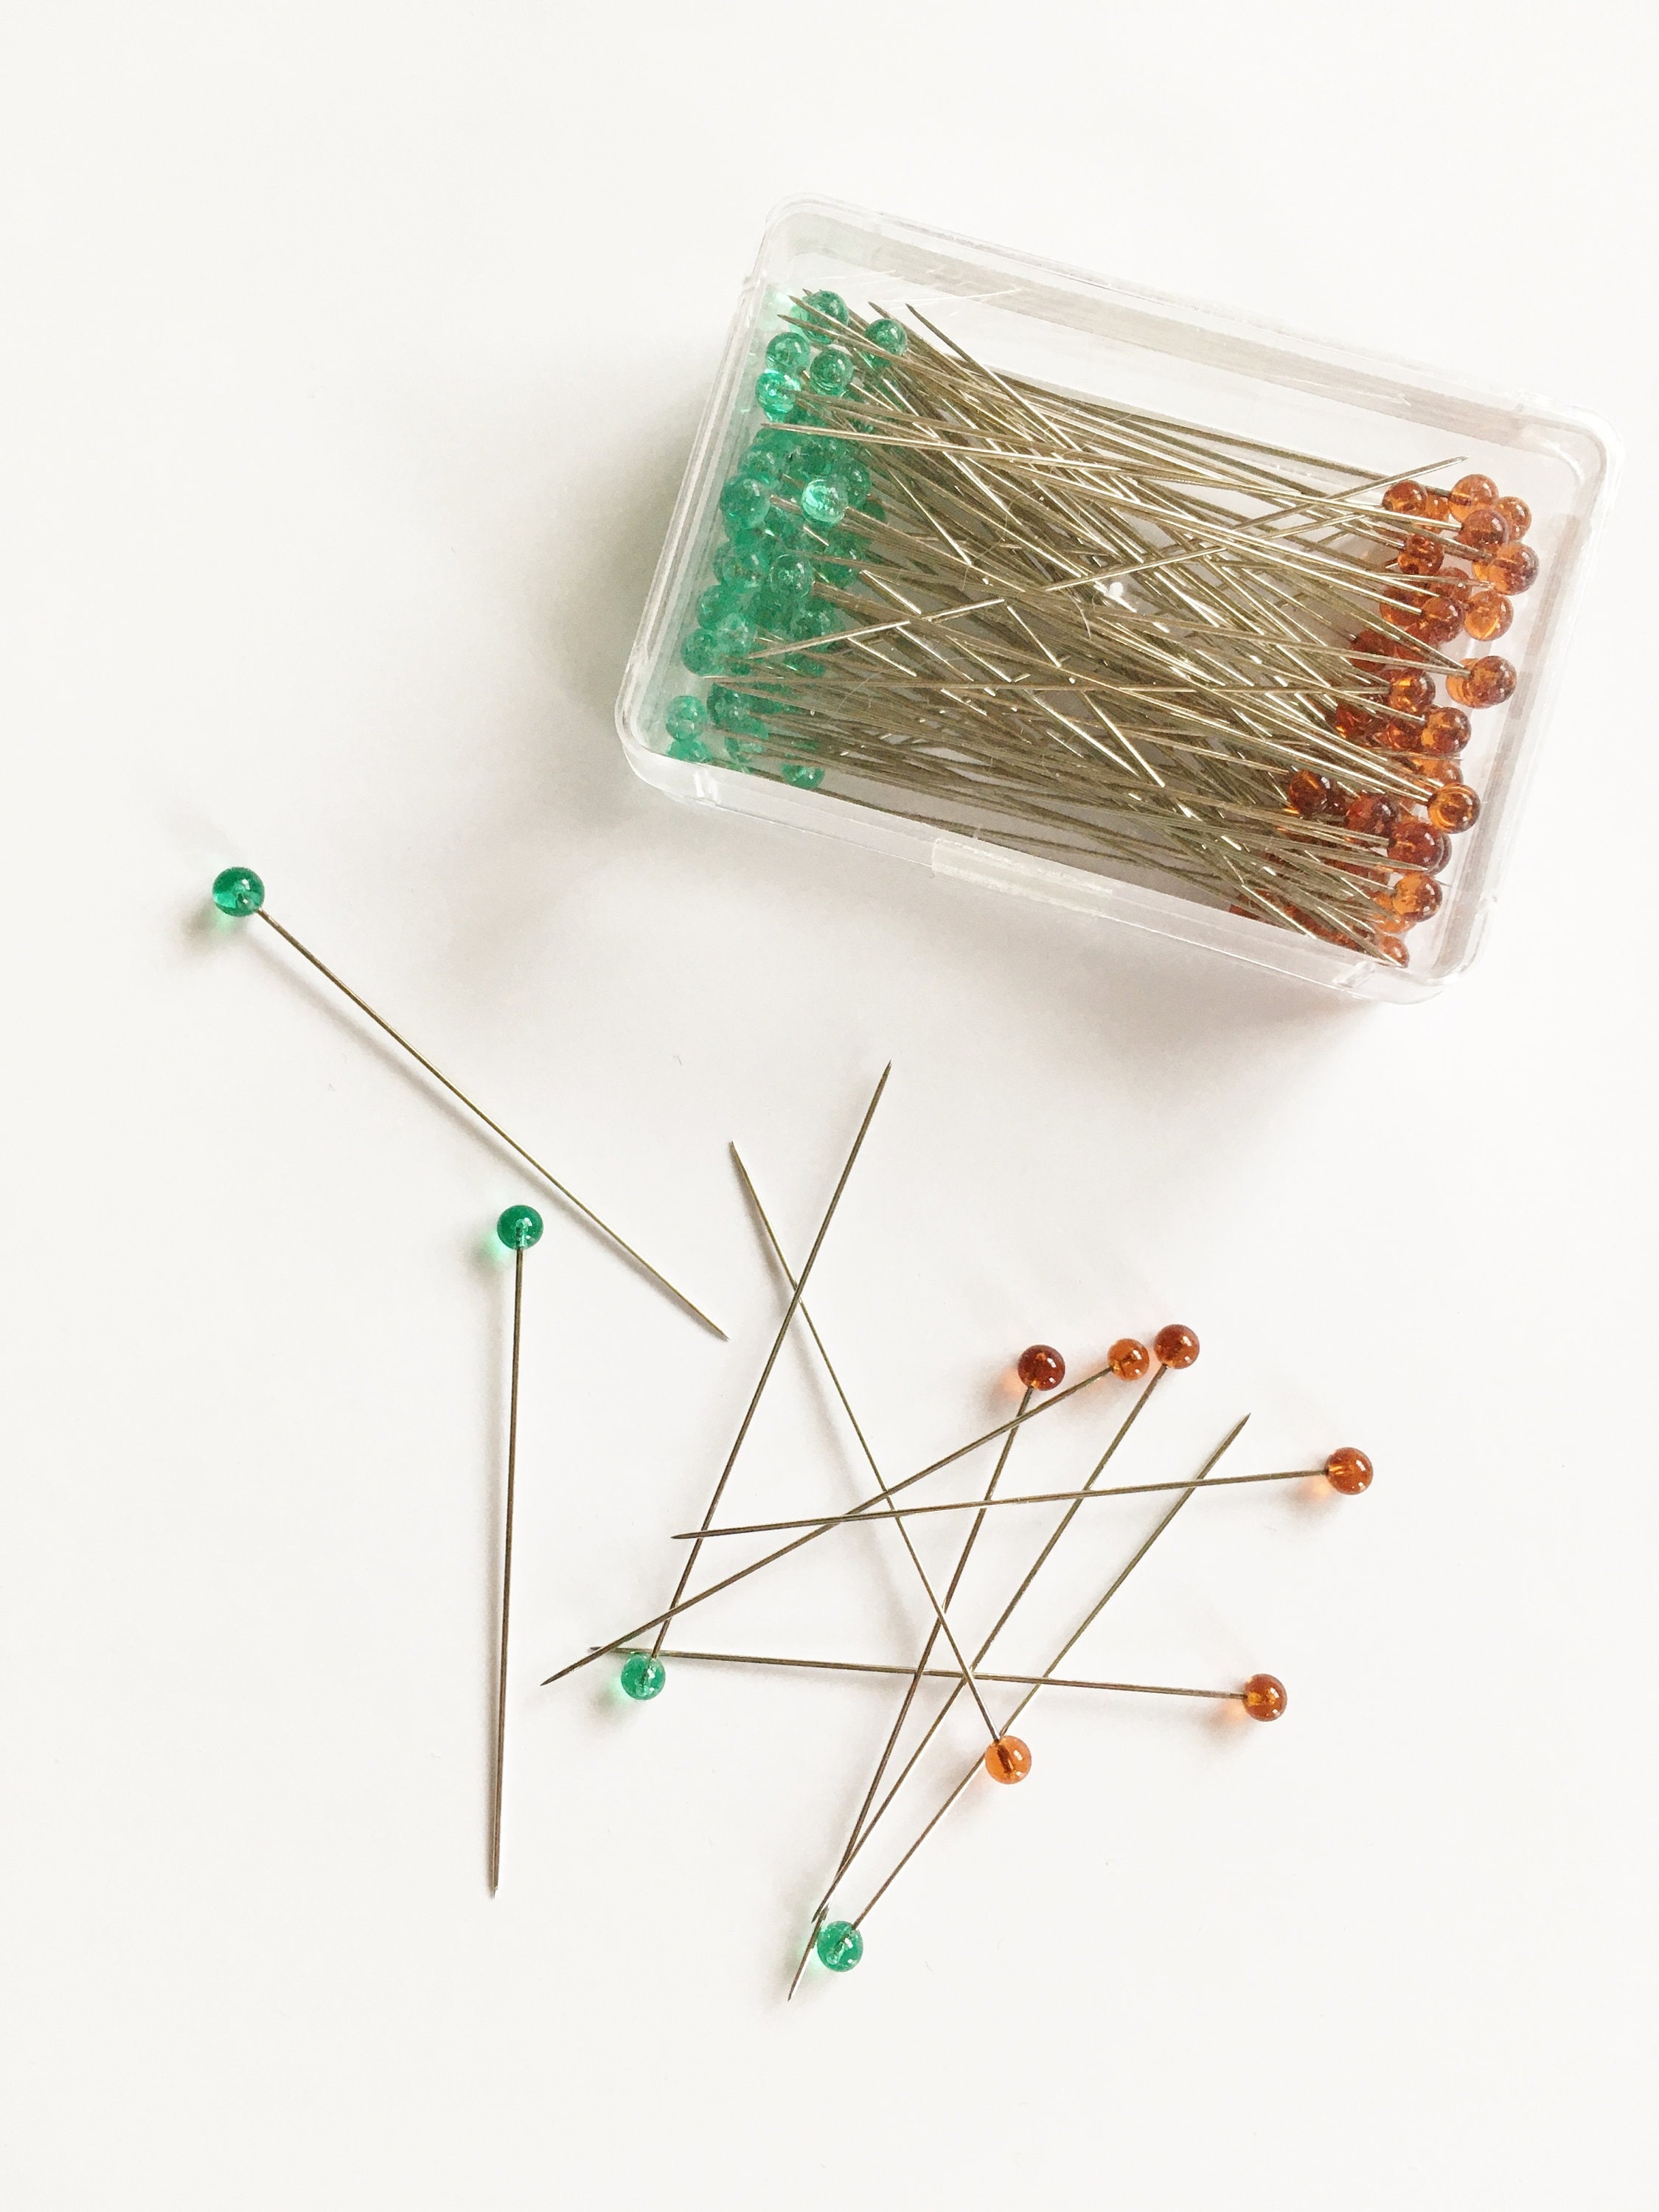 Fine Milward Knitting Needles, Size 10 / Ten, 3.25 Mm, Metal Knitting Pins  